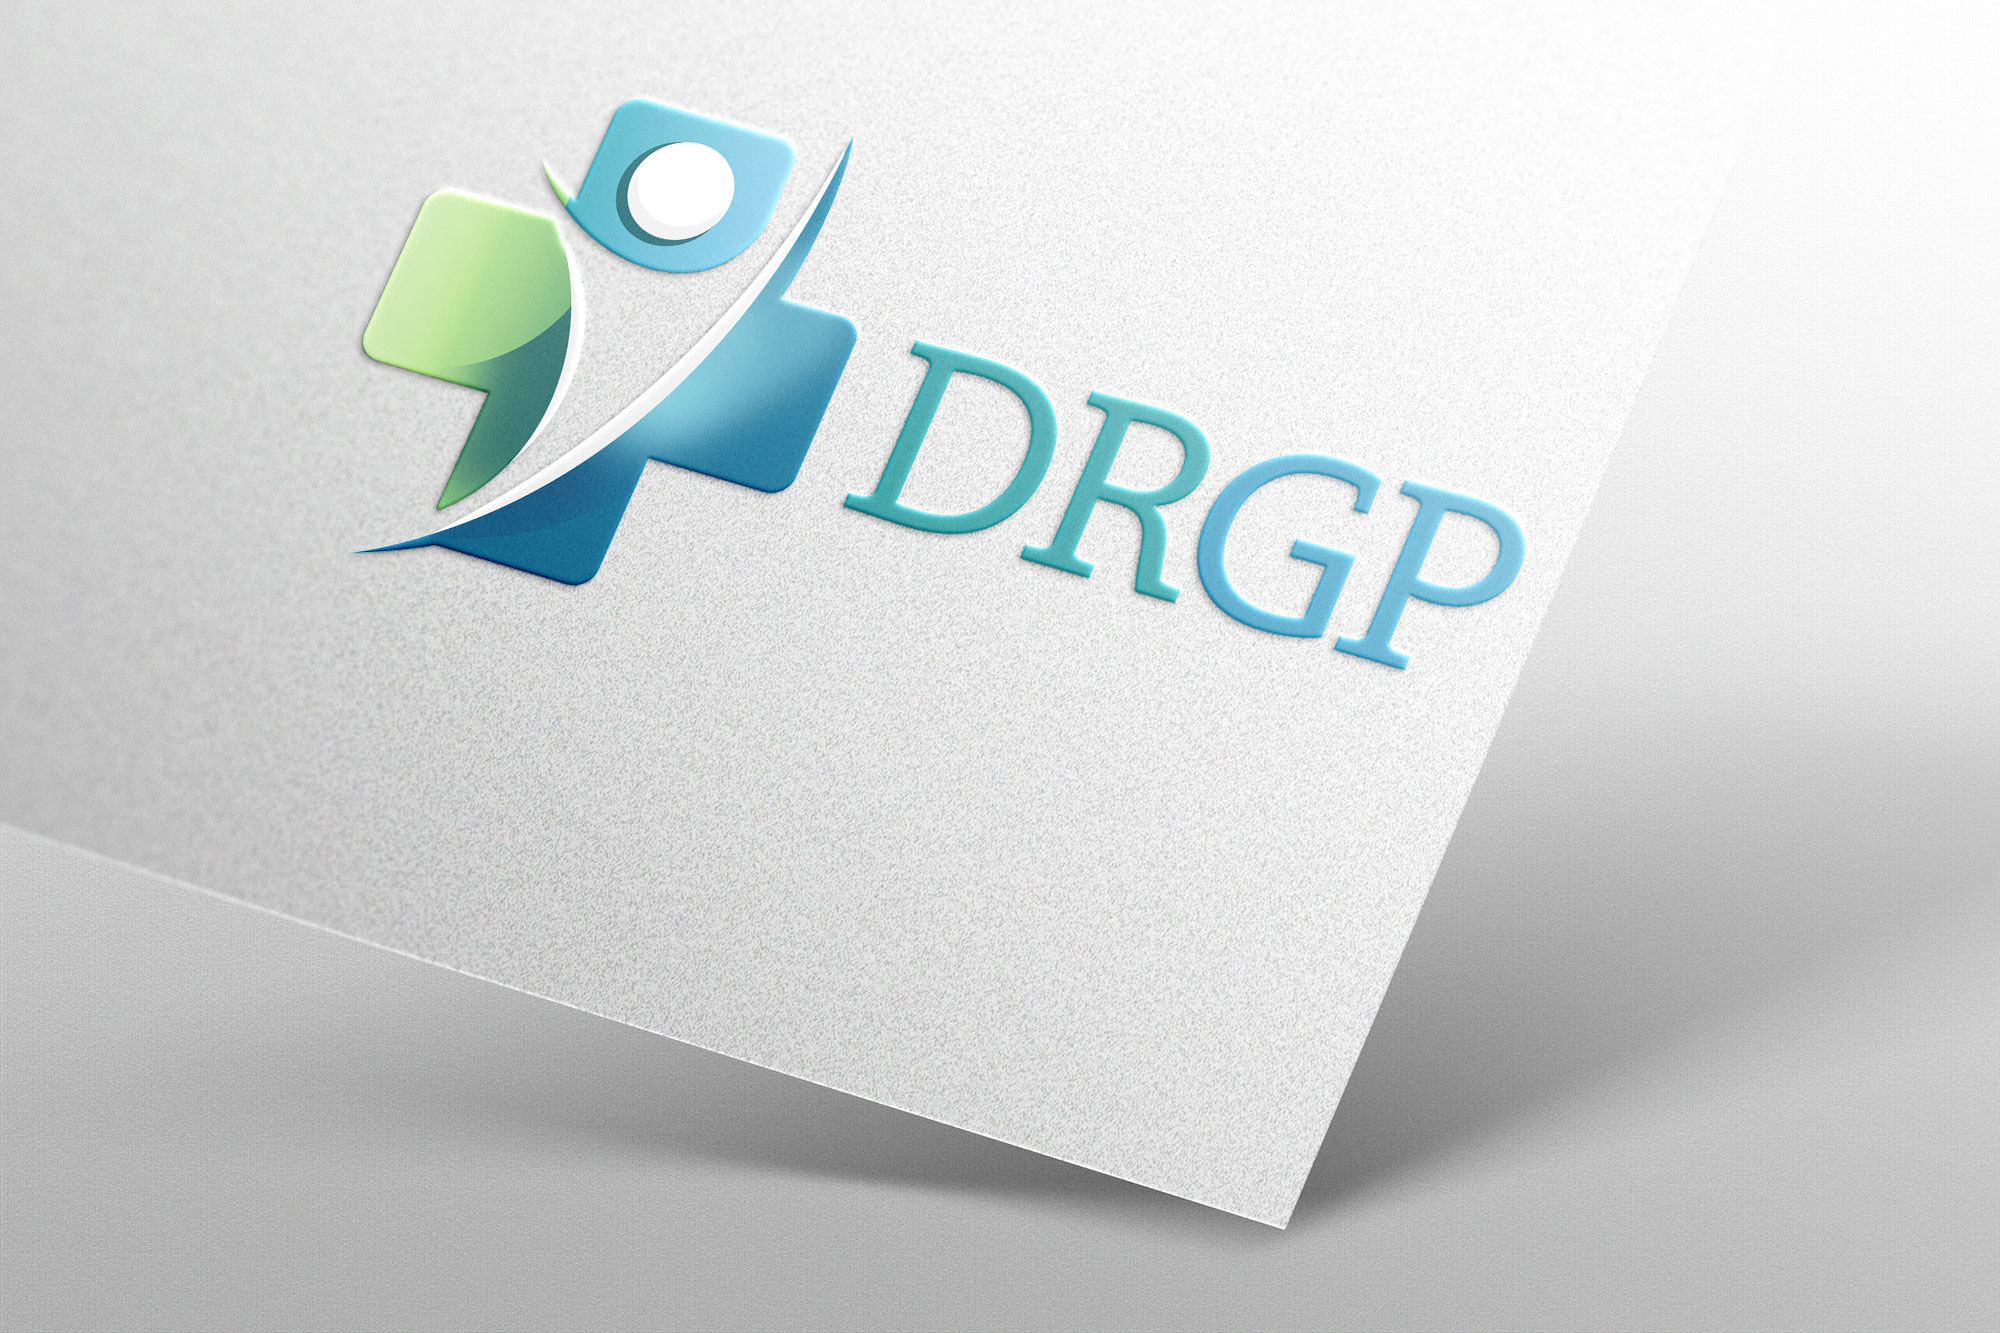 DRGP Private GP in UK